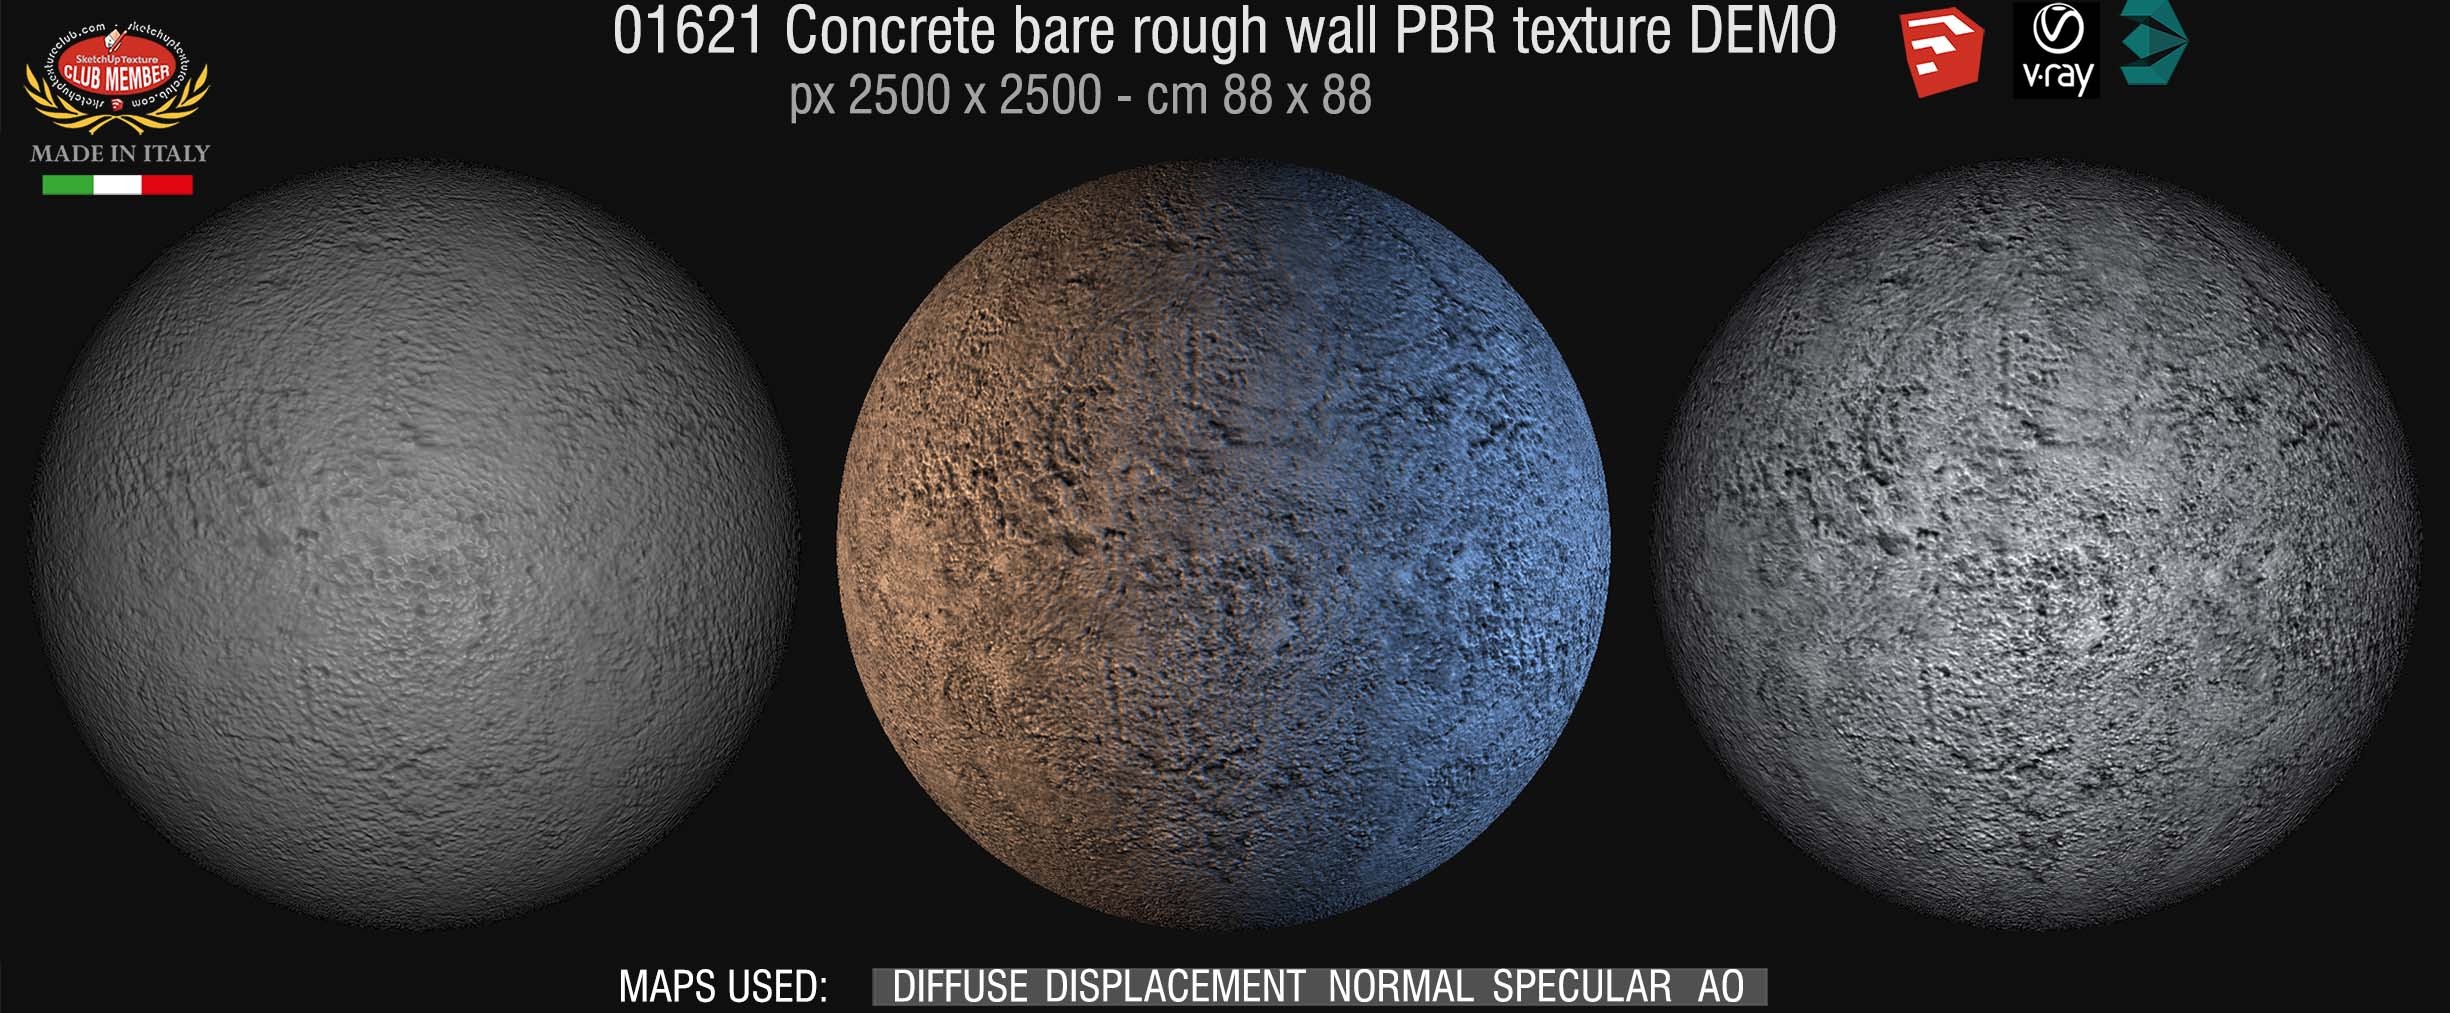 01621 Concrete bare rough wall PBR texture seamless DEMO